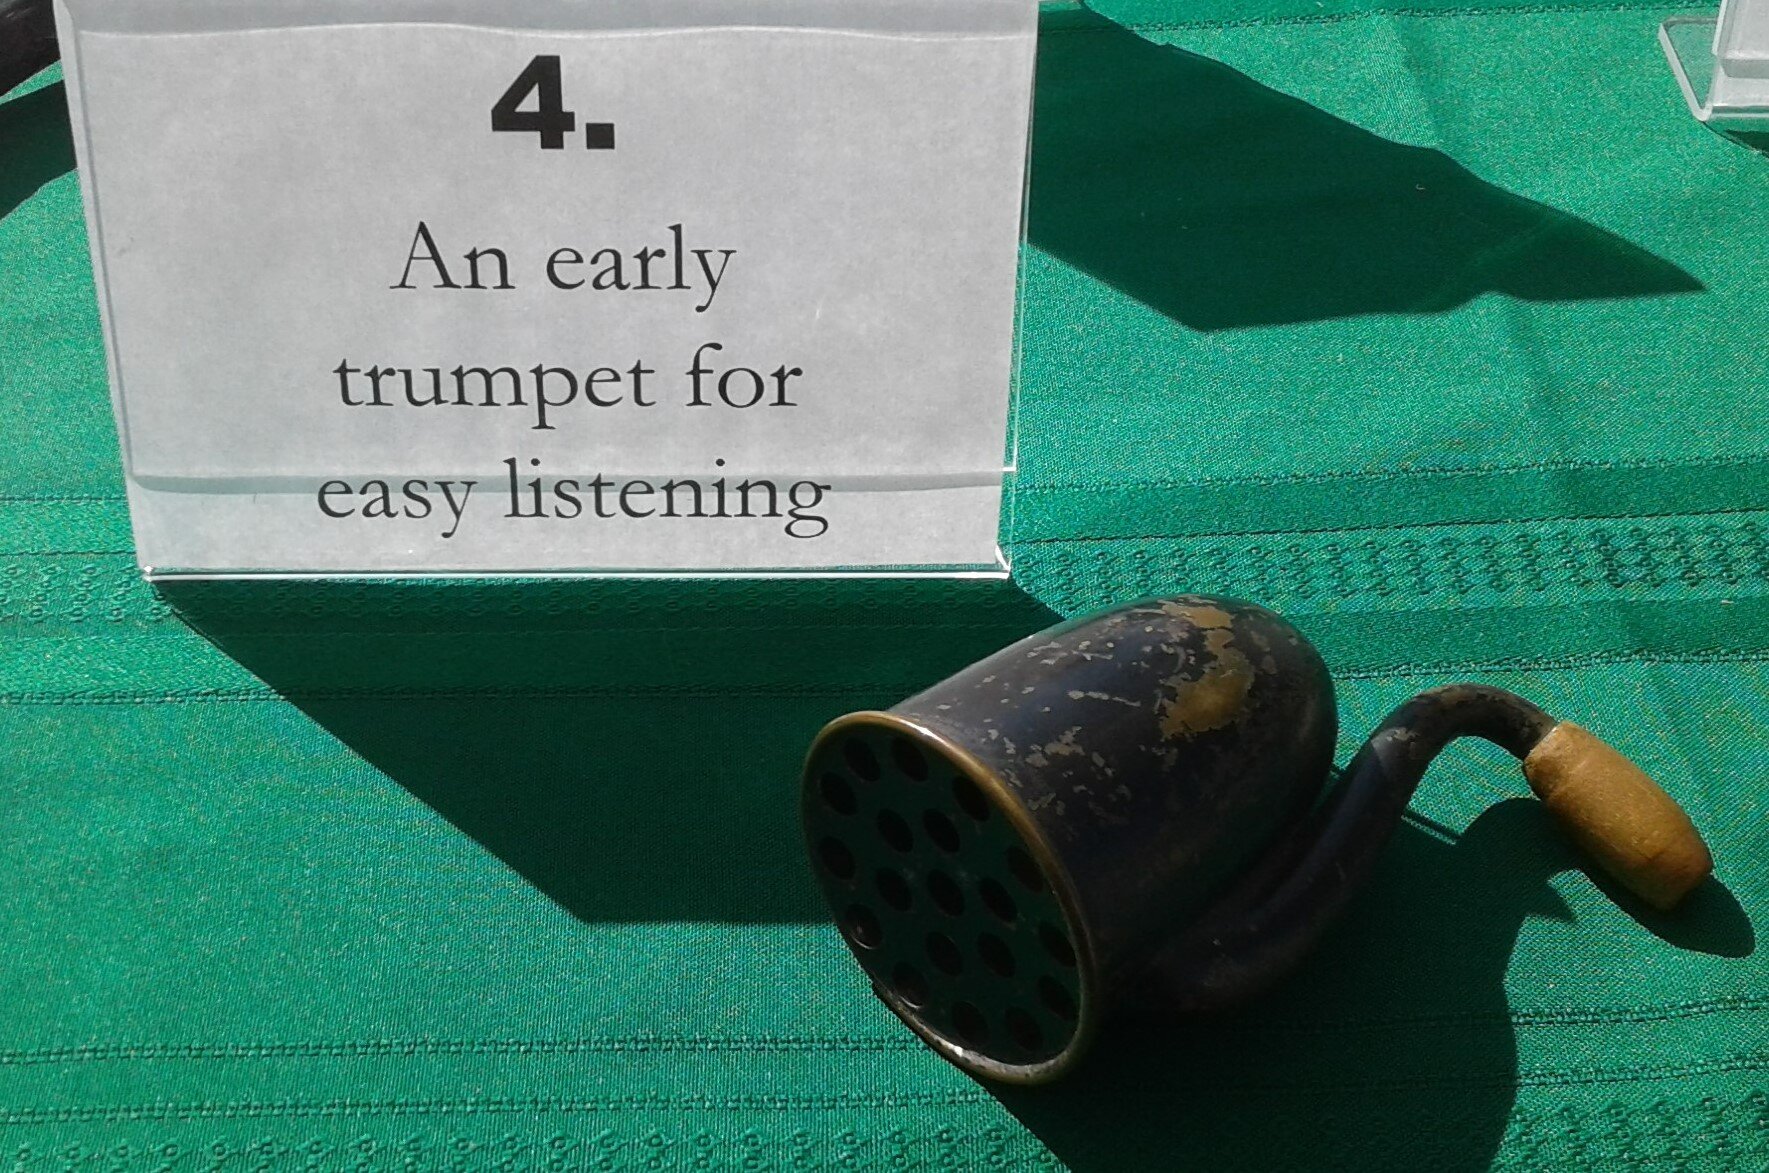 The ear trumpet was a popular item